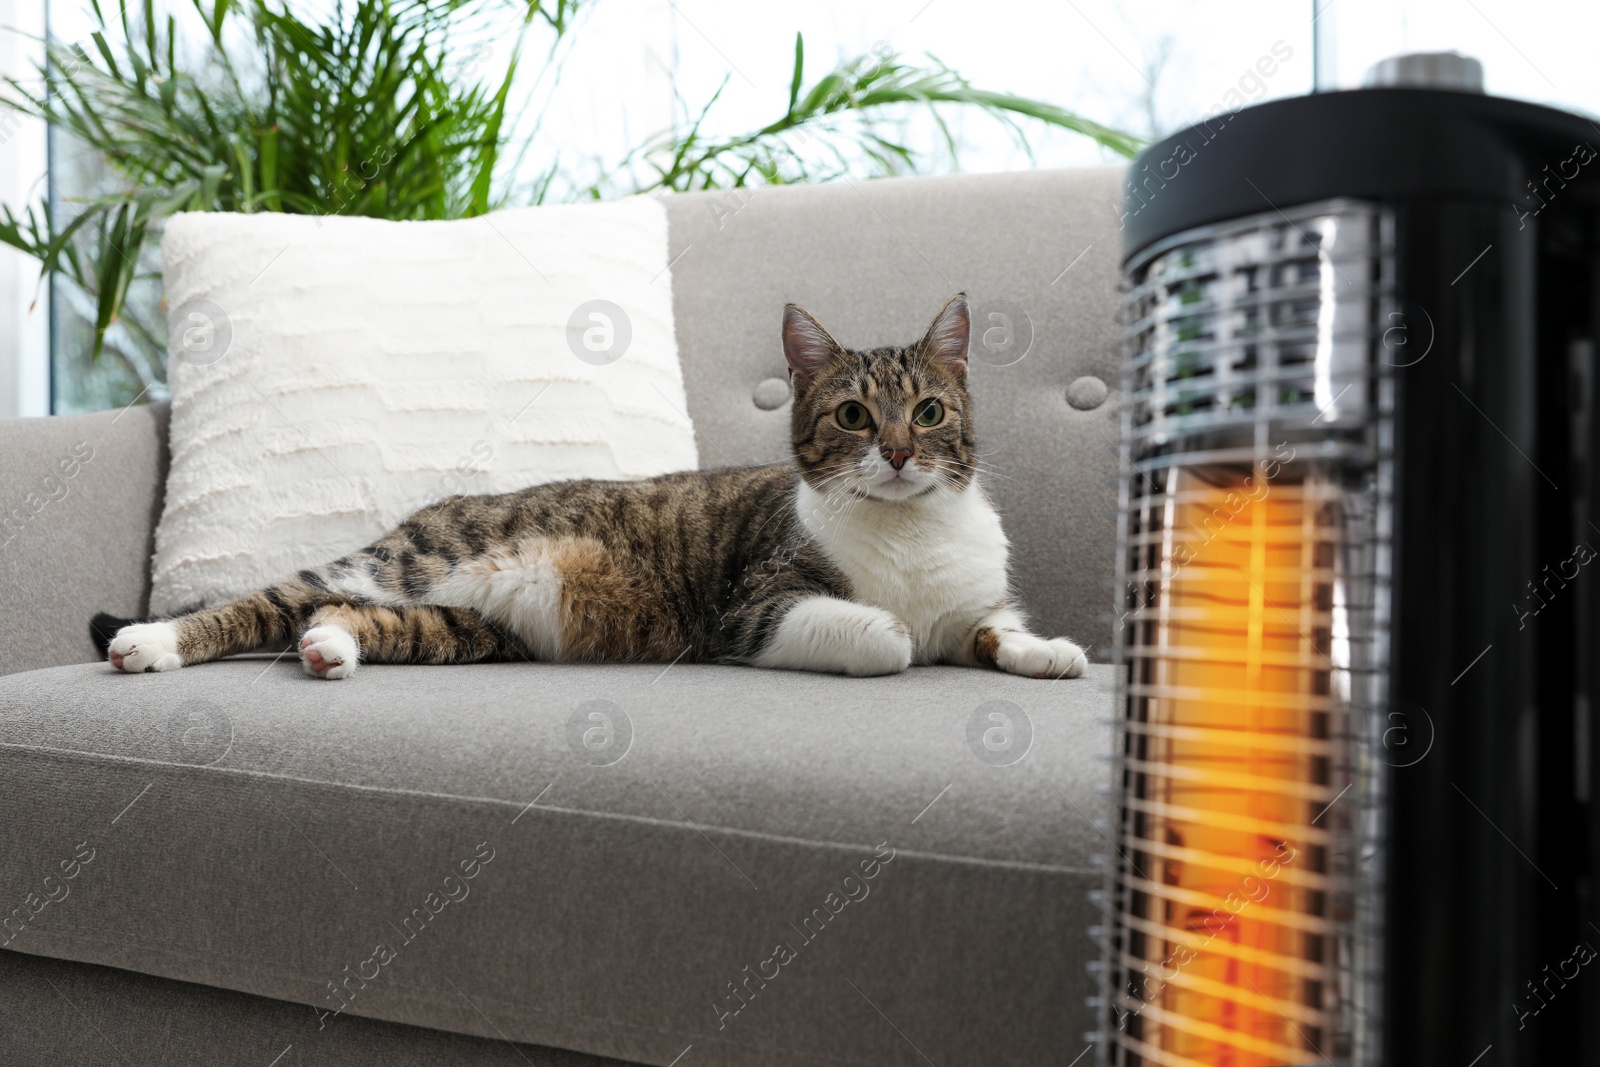 Photo of Cute cat on sofa near modern electric halogen heater indoors